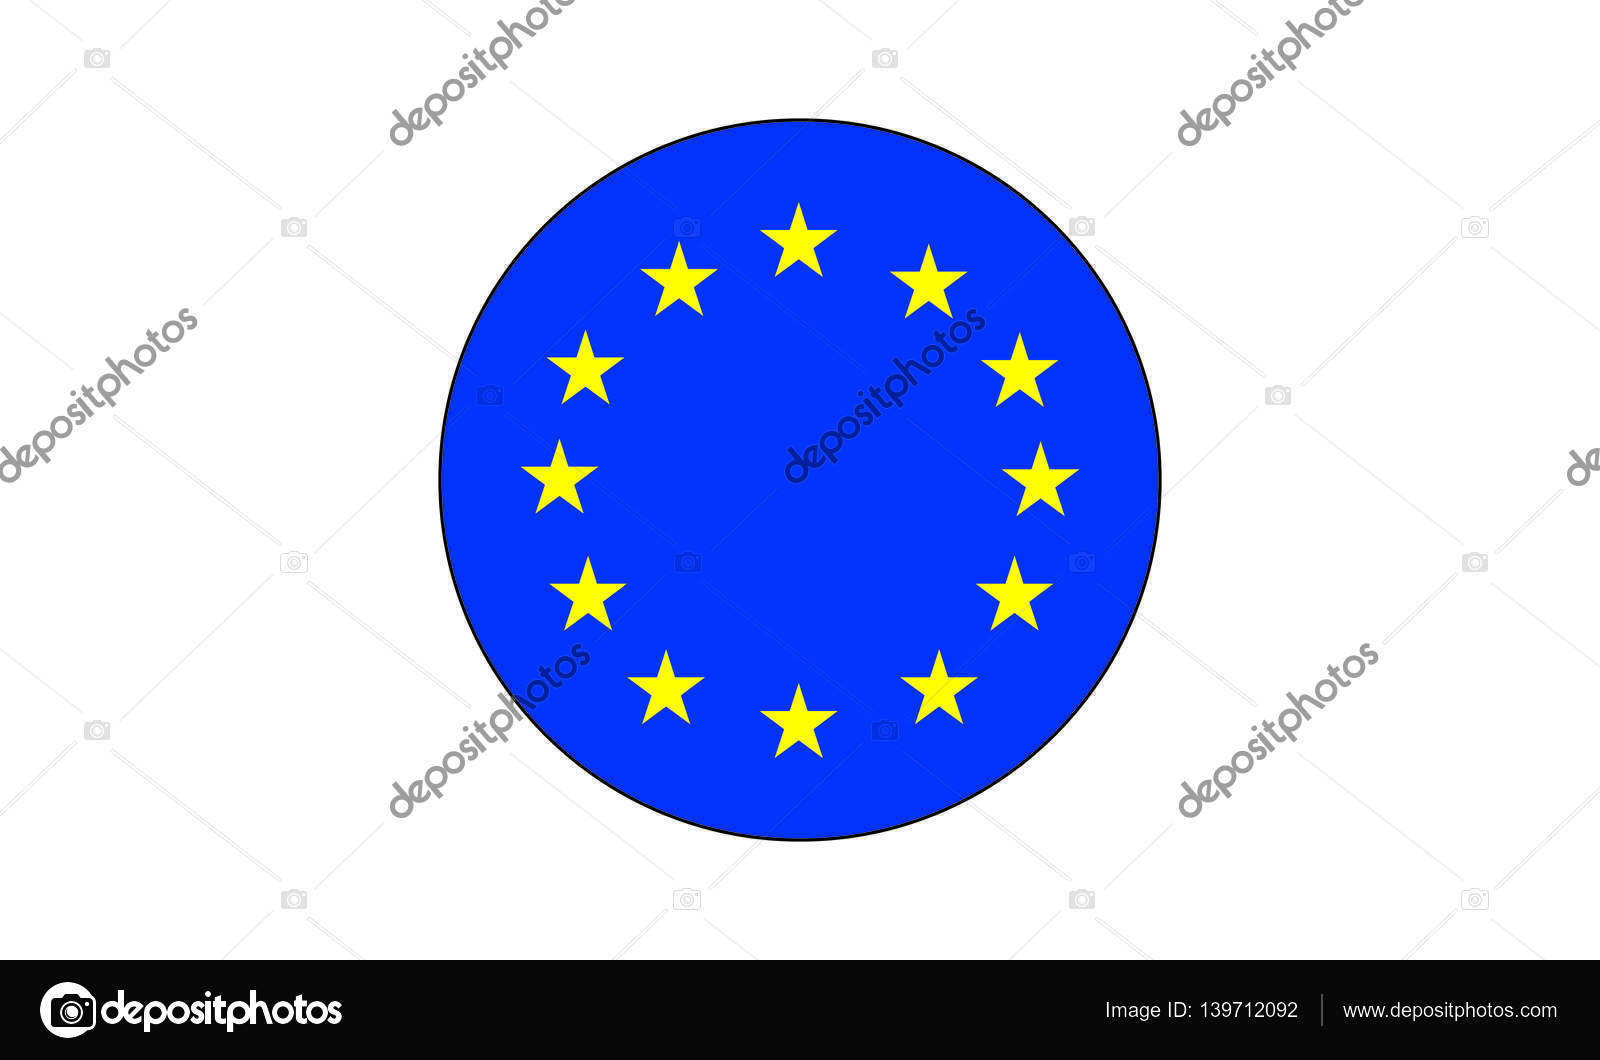 Pictogram Europe Flag Circle Flat Design Object Symbol Icon Stock Photo C Info Vs Cd De 139712092